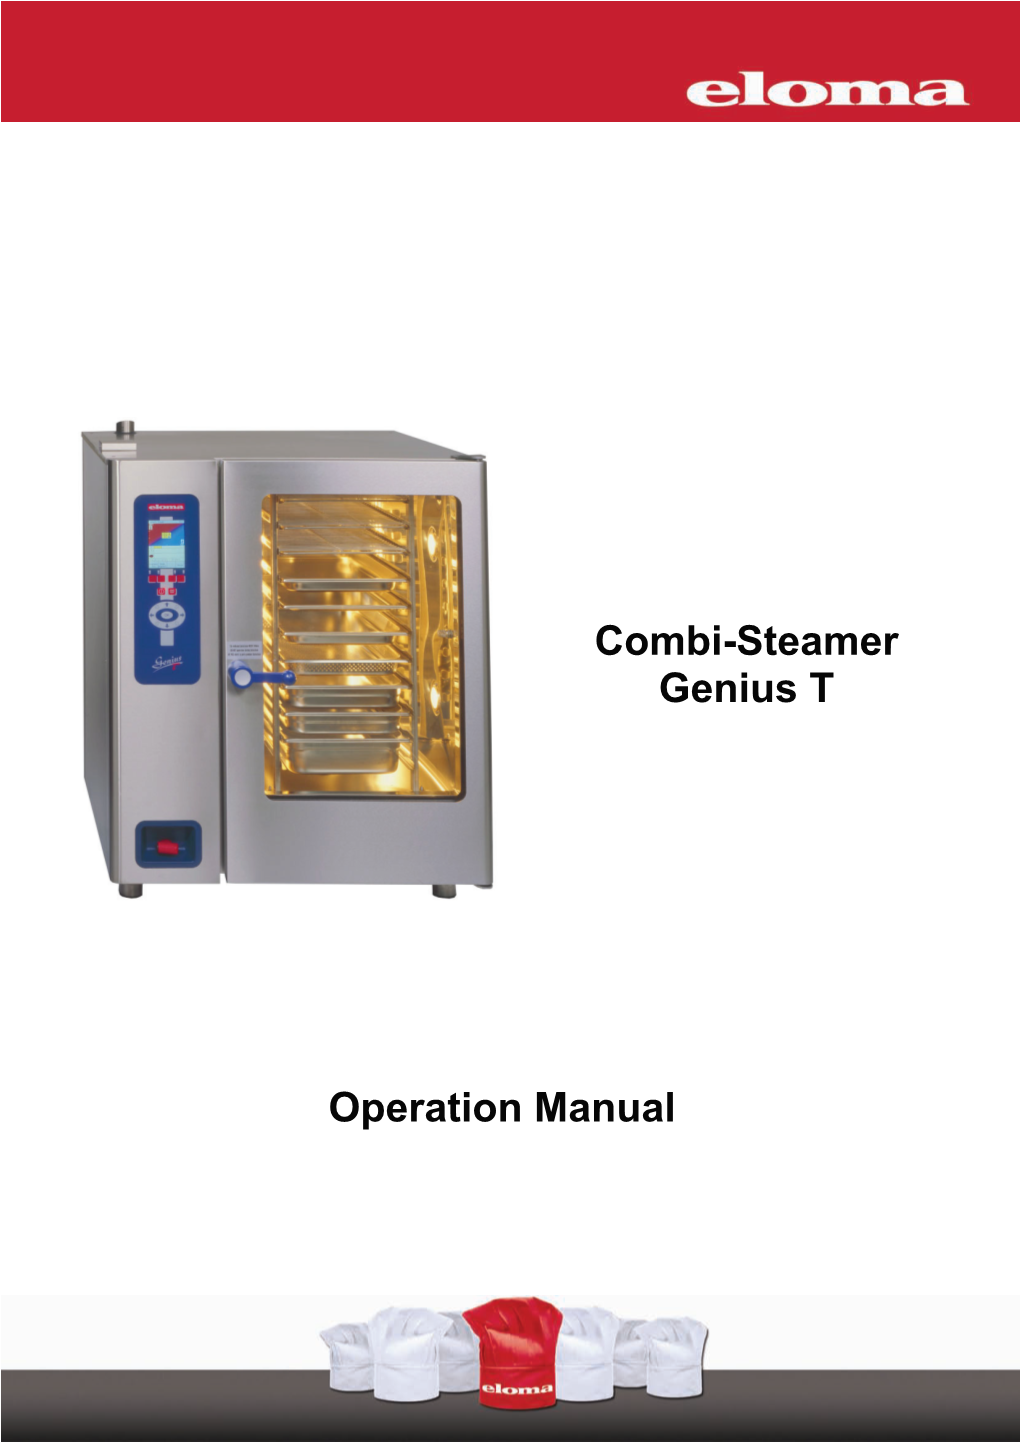 Operation Manual Combi-Steamer Genius T